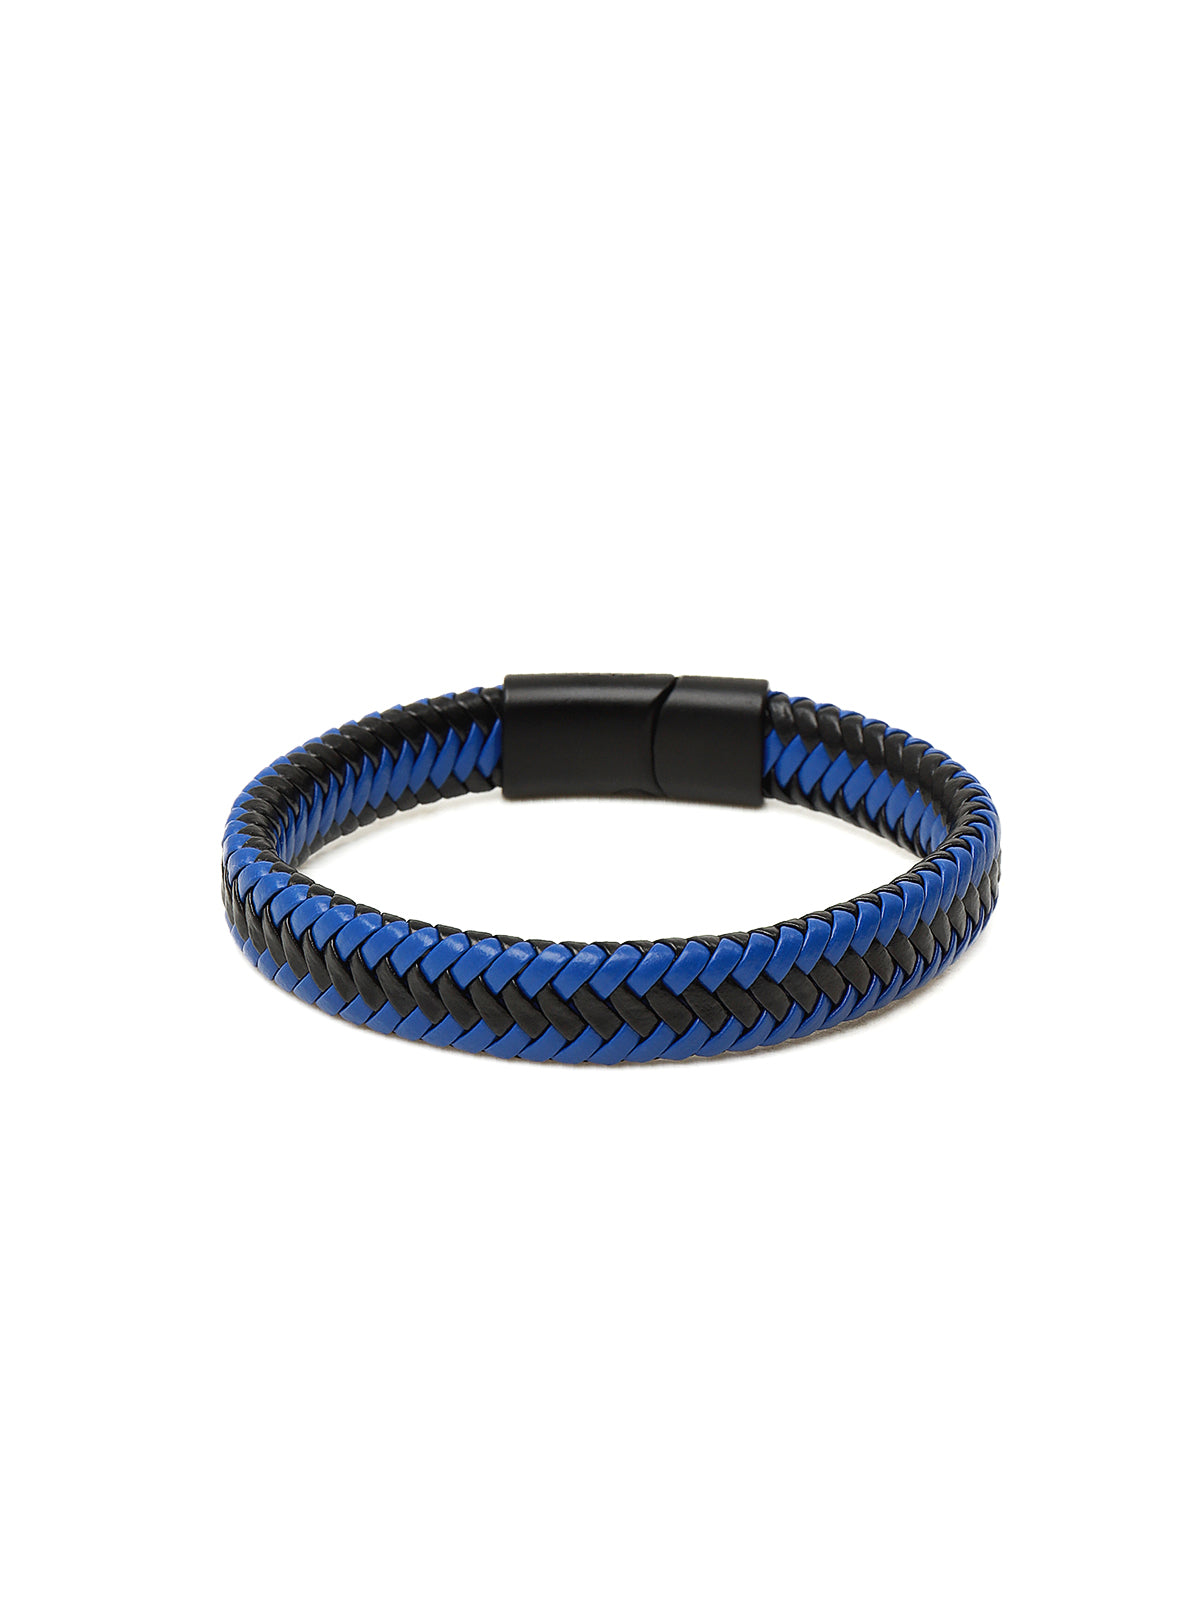 Blue Leather Bracelet - FABR24-019